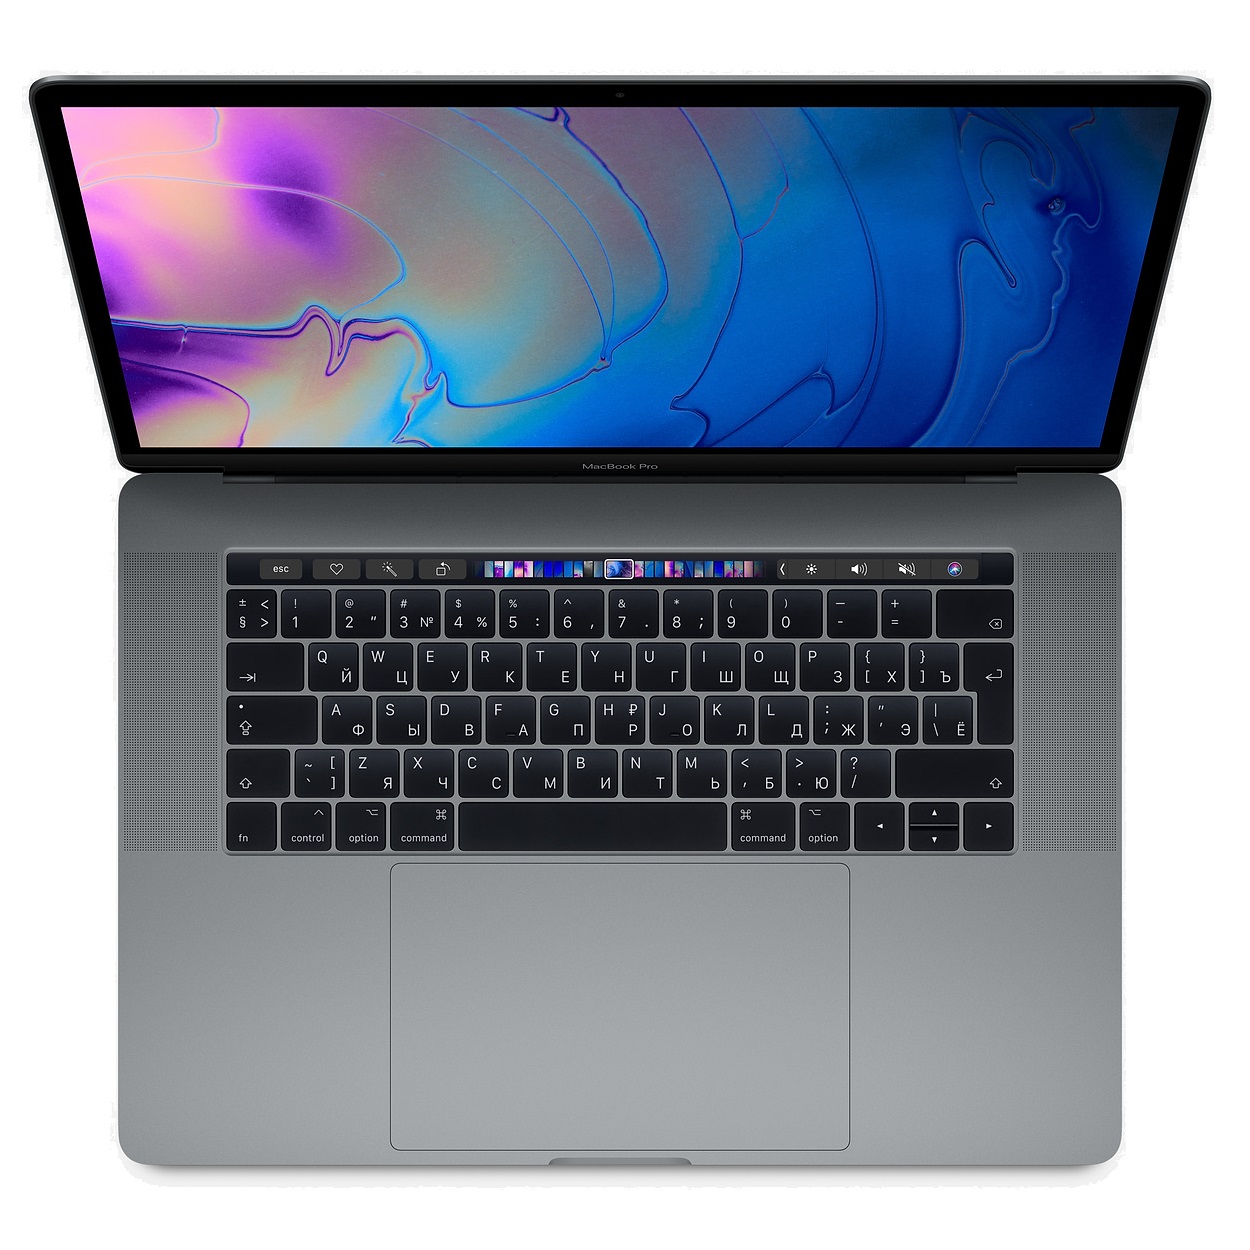 Ноутбук Apple MacBook Pro 15 with Retina display and Touch Bar Mid 2019 Space Gray (MV902RU/A) (Intel Core i7 2600 MHz/15.4/2880x1800/16GB/256GB SSD/DVD нет/AMD Radeon Pro 555X/Wi-Fi/Bluetooth/macOS)